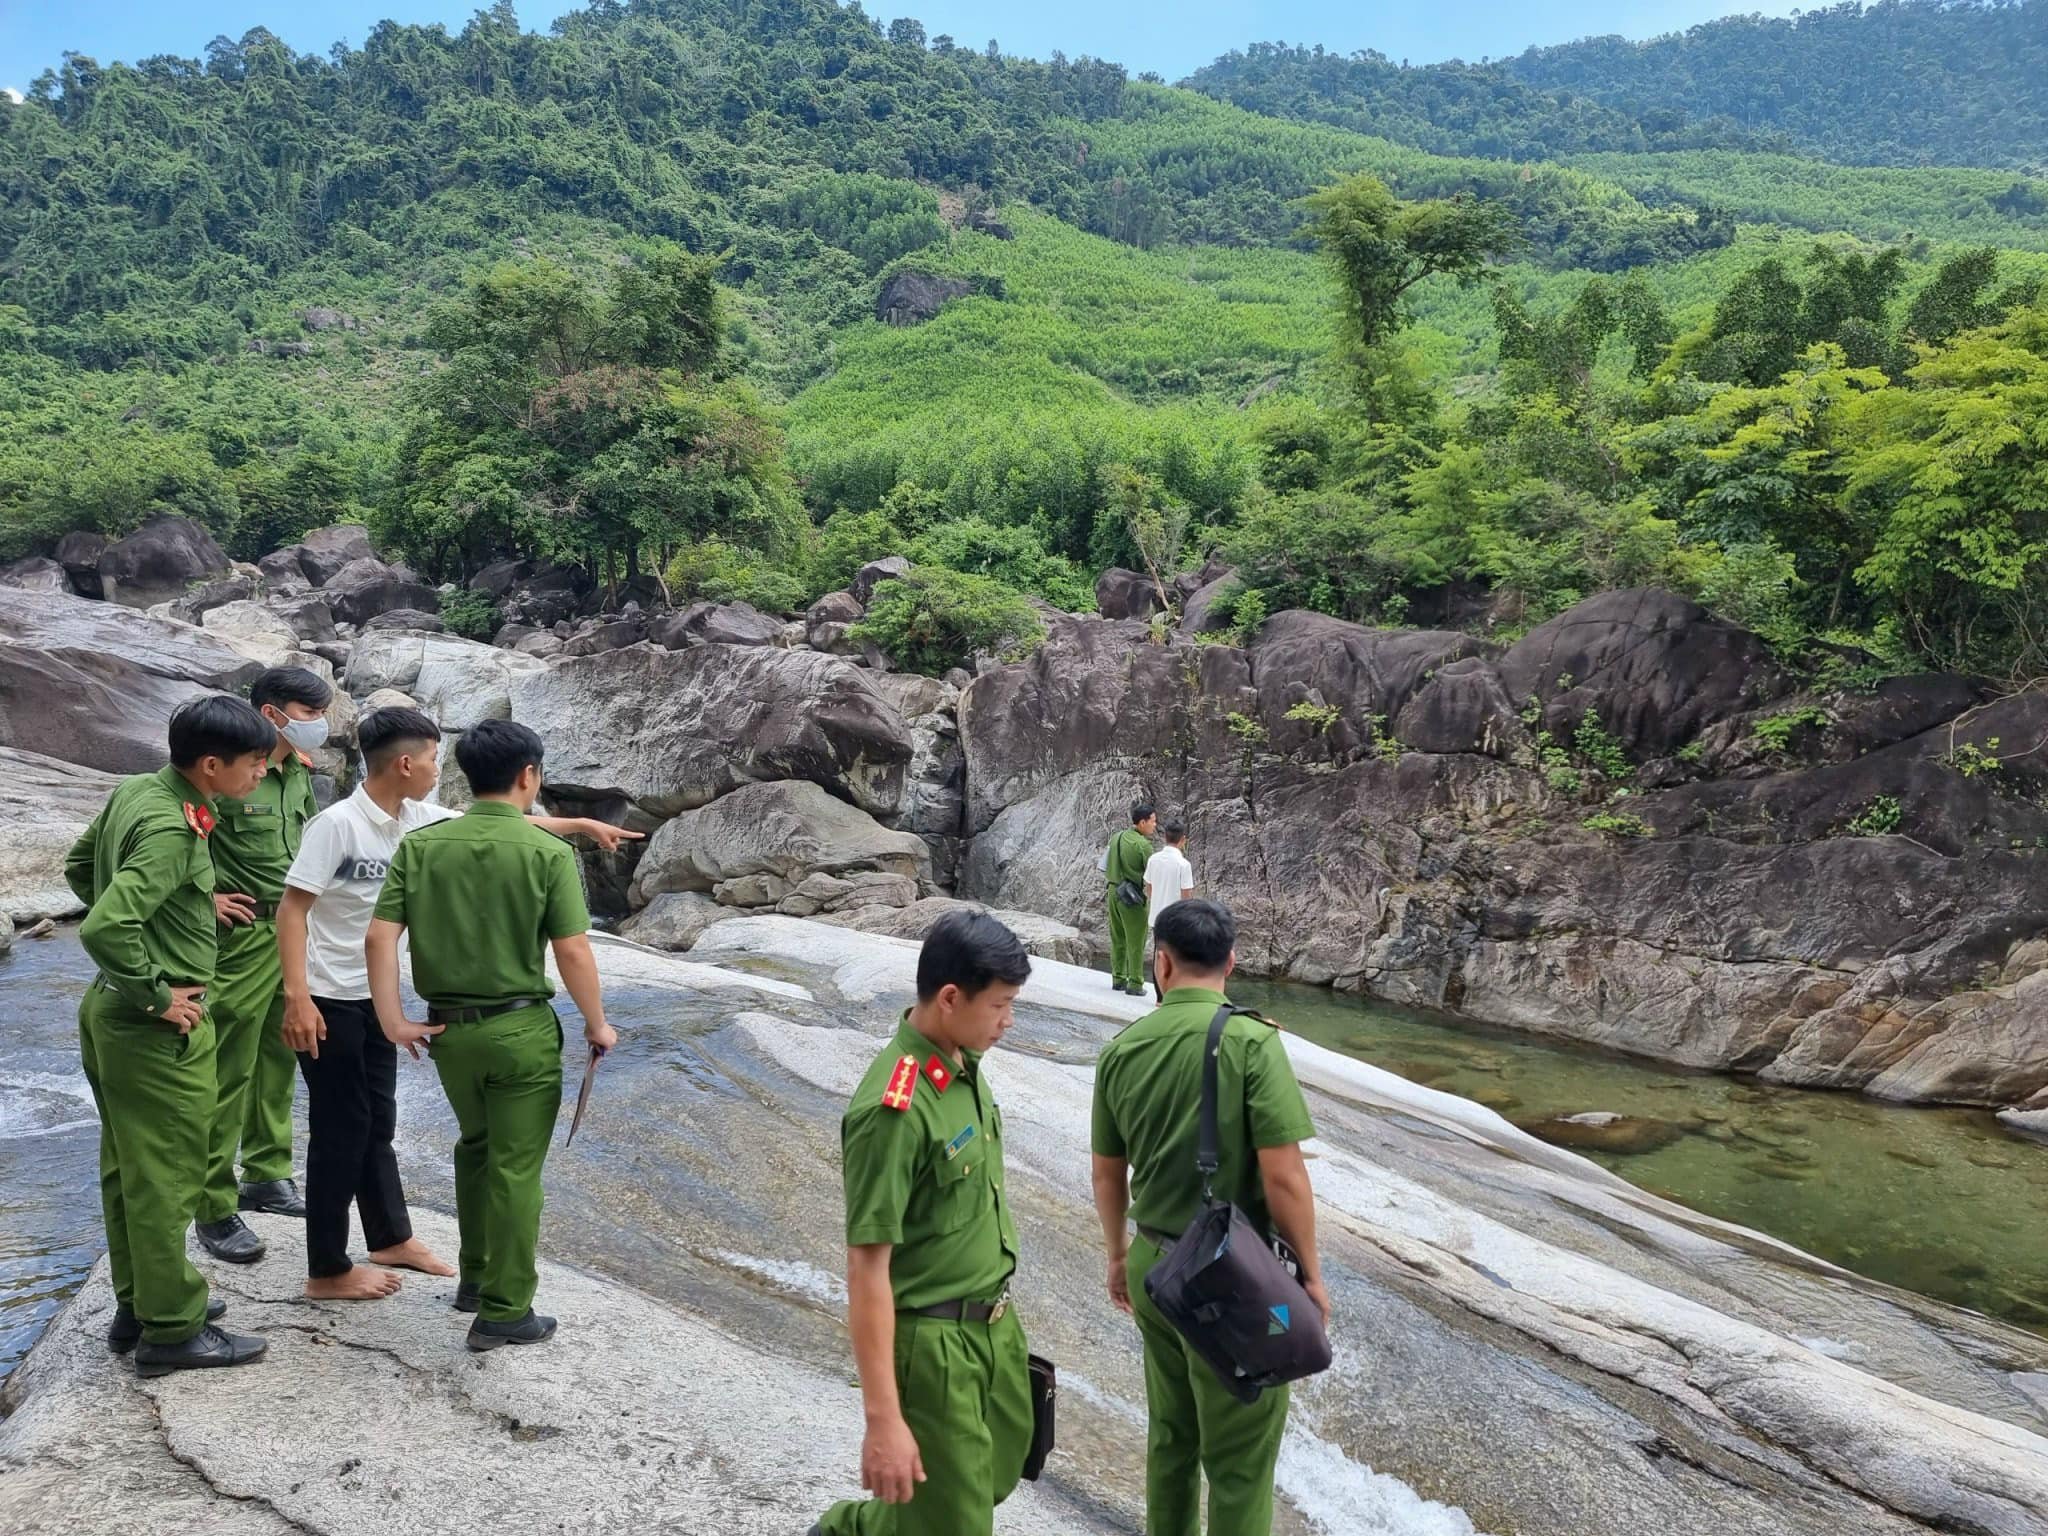 Teenagers drown in stream in central Vietnam